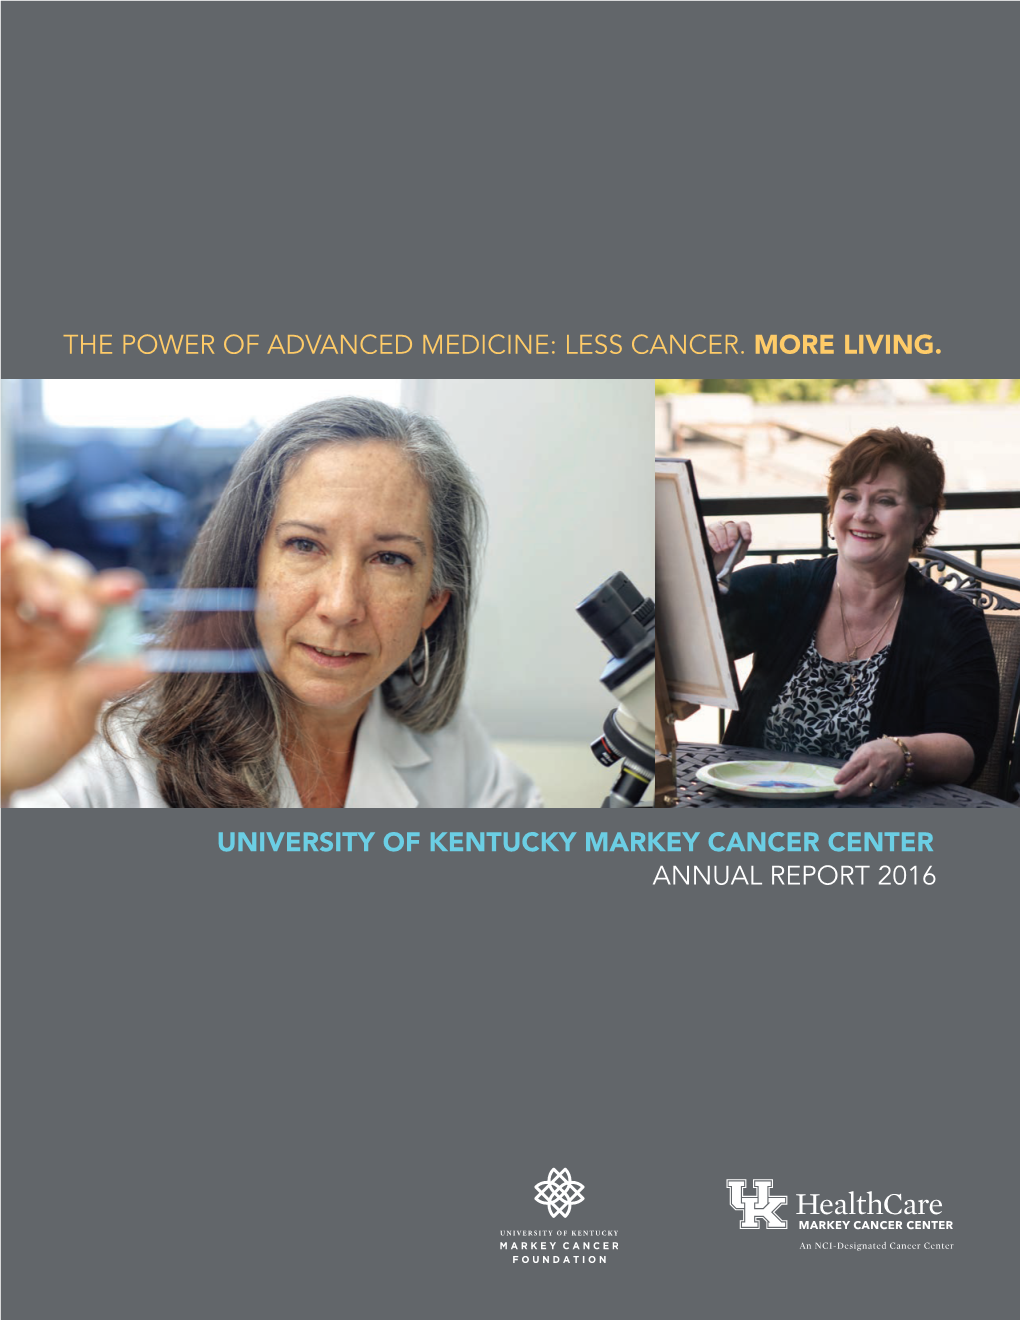 University of Kentucky Markey Cancer Center Annual Report 2016